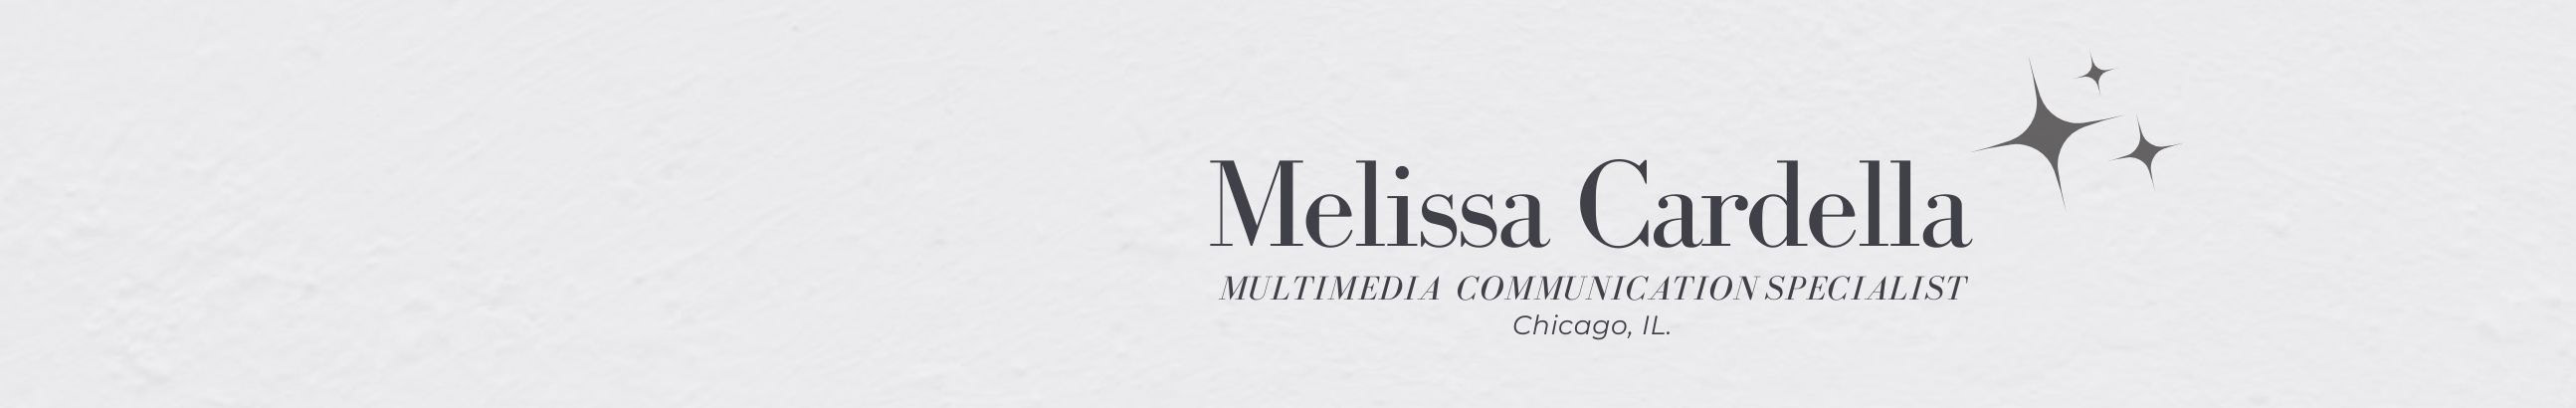 Banner de perfil de Melissa Cardella